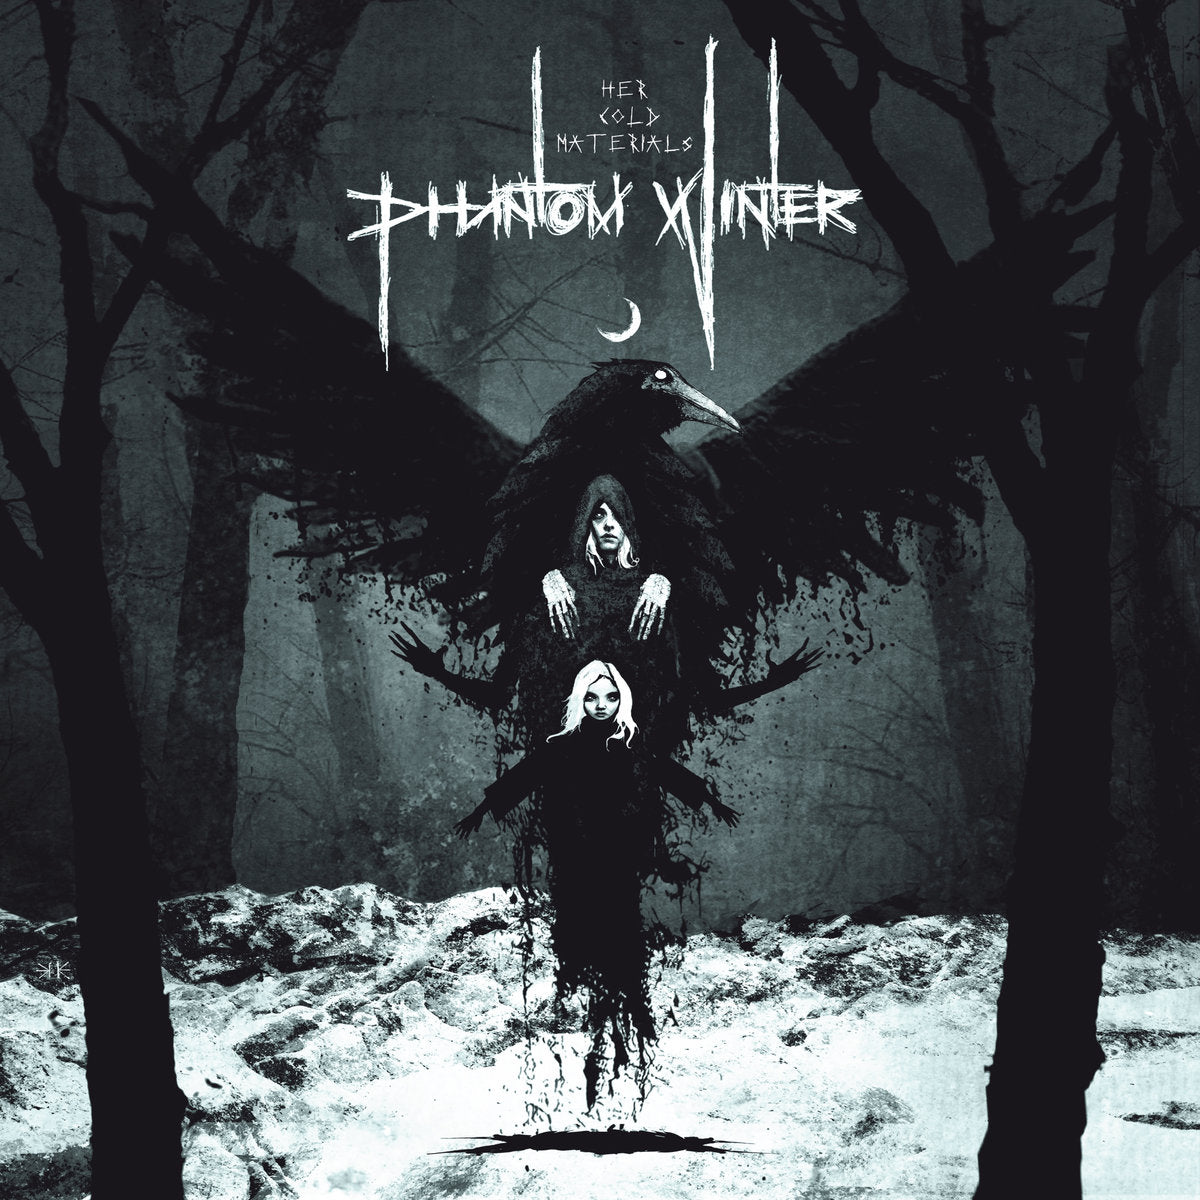 Phantom Winter - Her Cold Materials CD